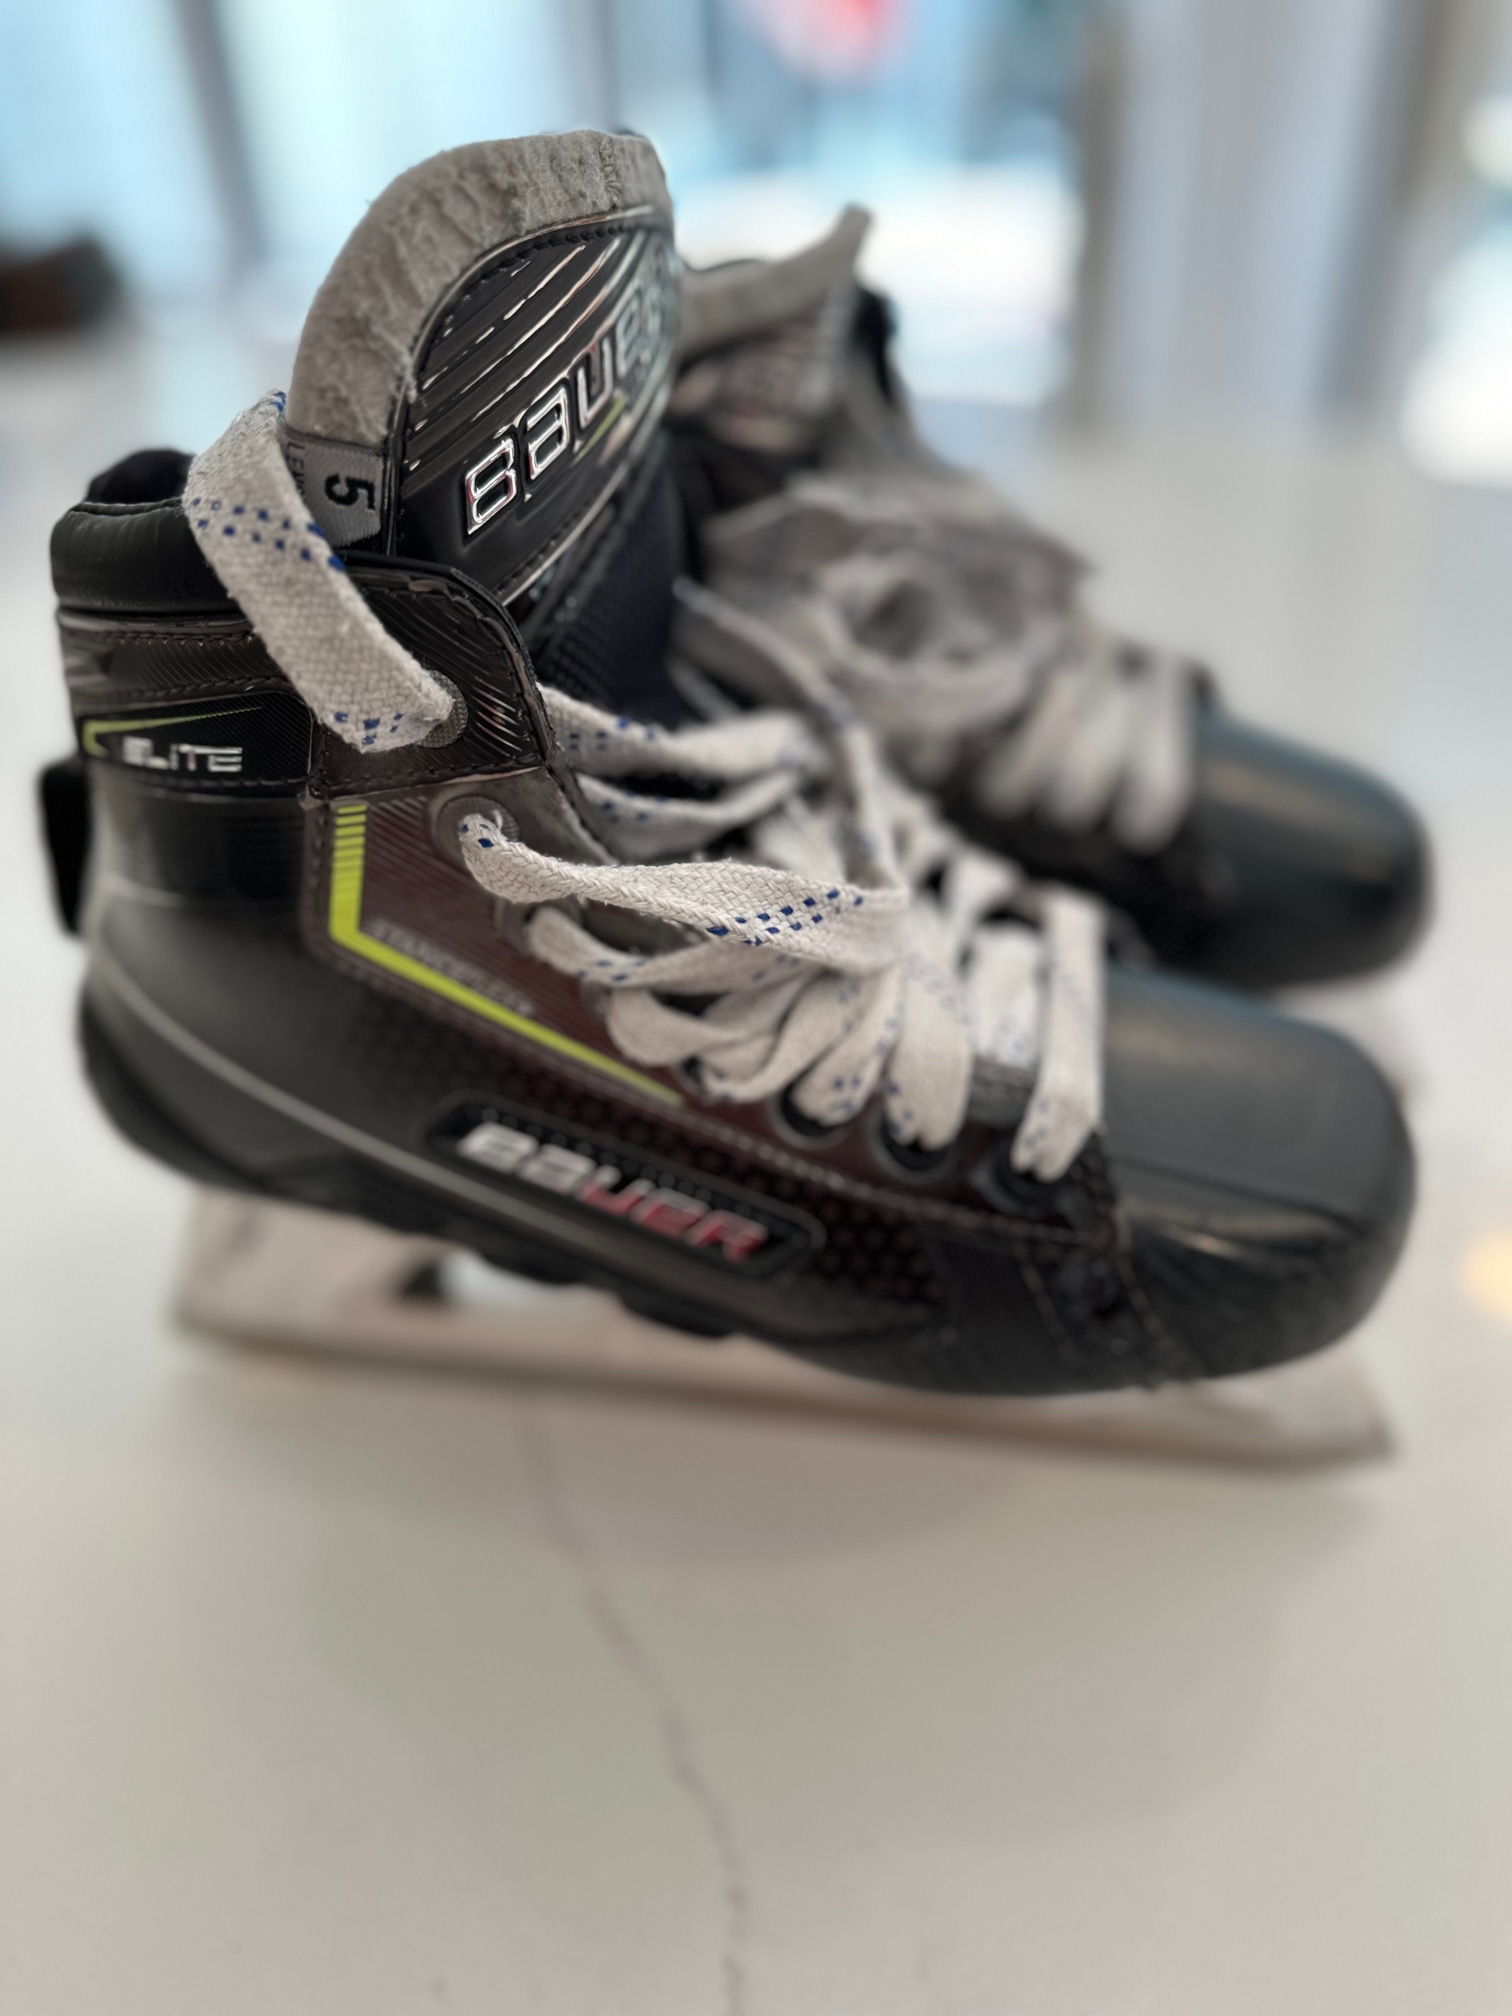 Used Bauer Elite Hockey Goalie Skates Regular Width Size 5